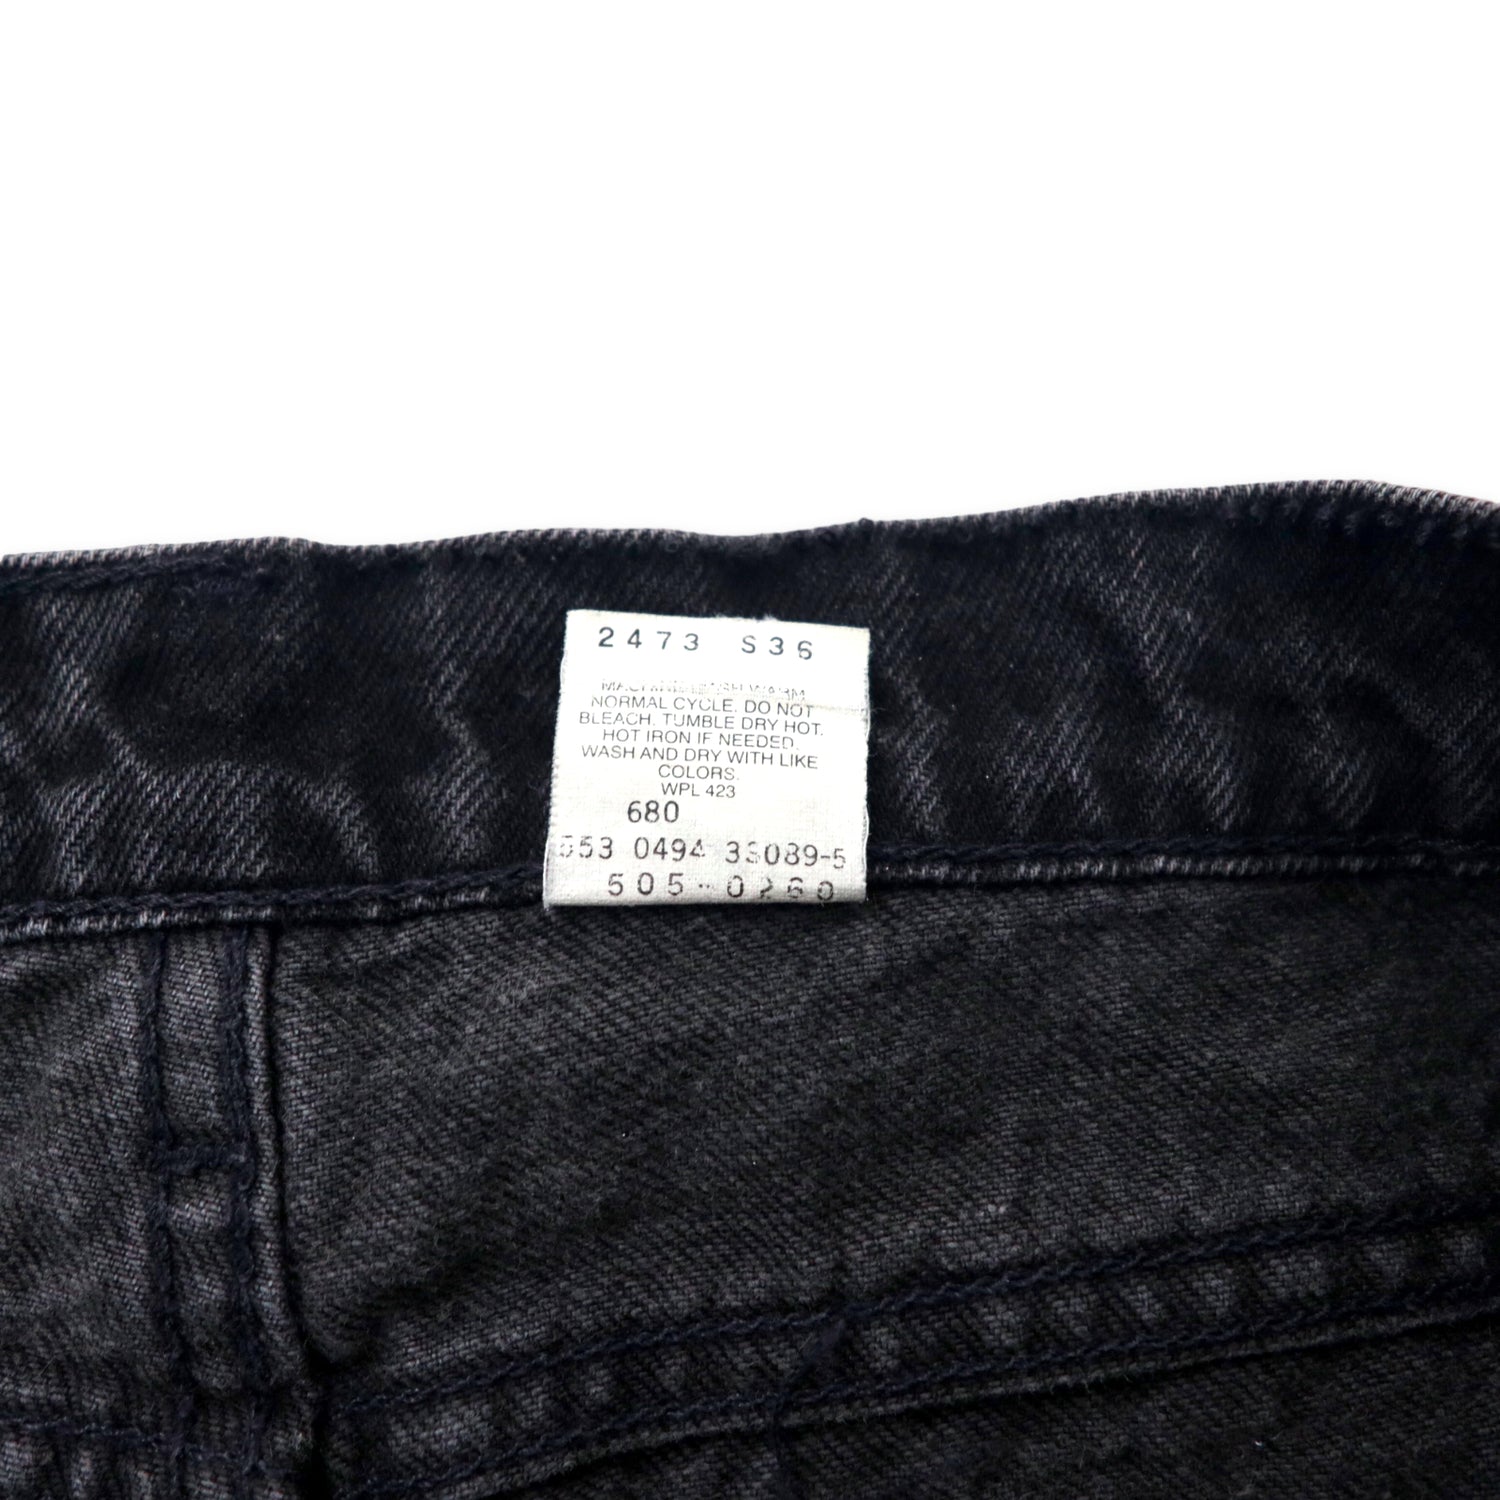 Levi's USA MADE 90's 505 Black Denim Pants 36 REGULAR FIT STRAIGHT